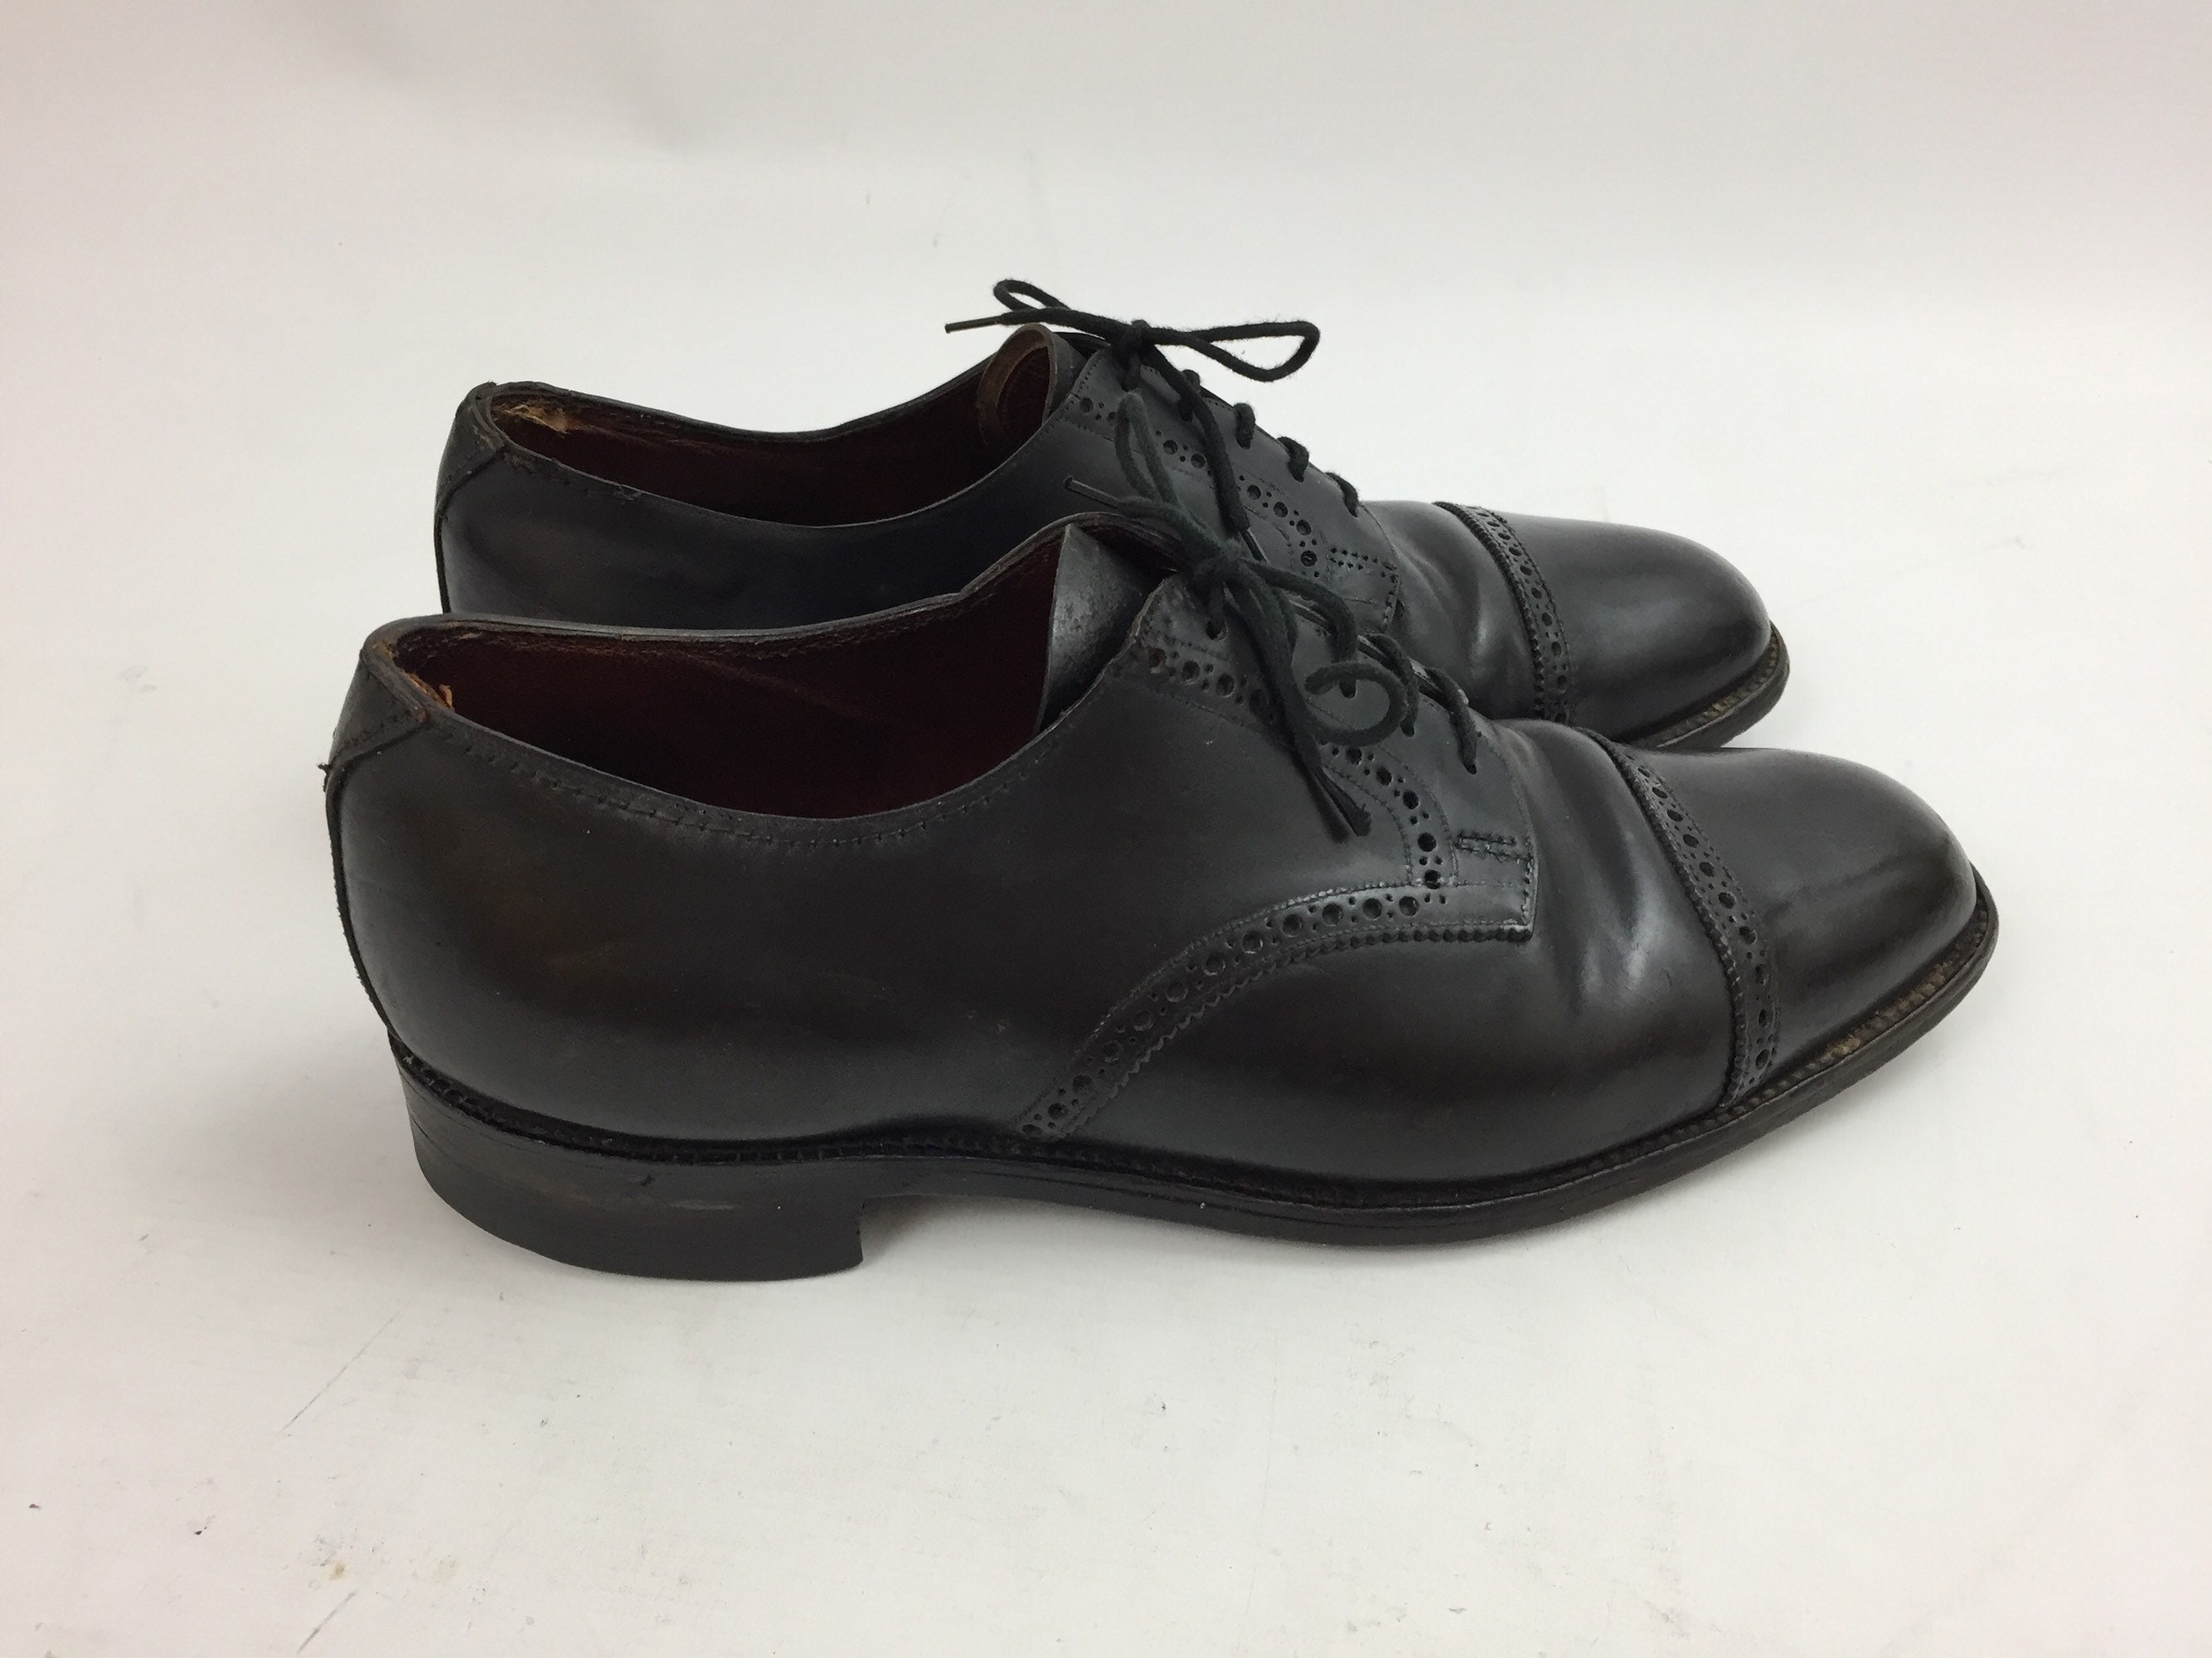 Amazing 1930s Men's Handmade Black Oxford Shoes | Etsy